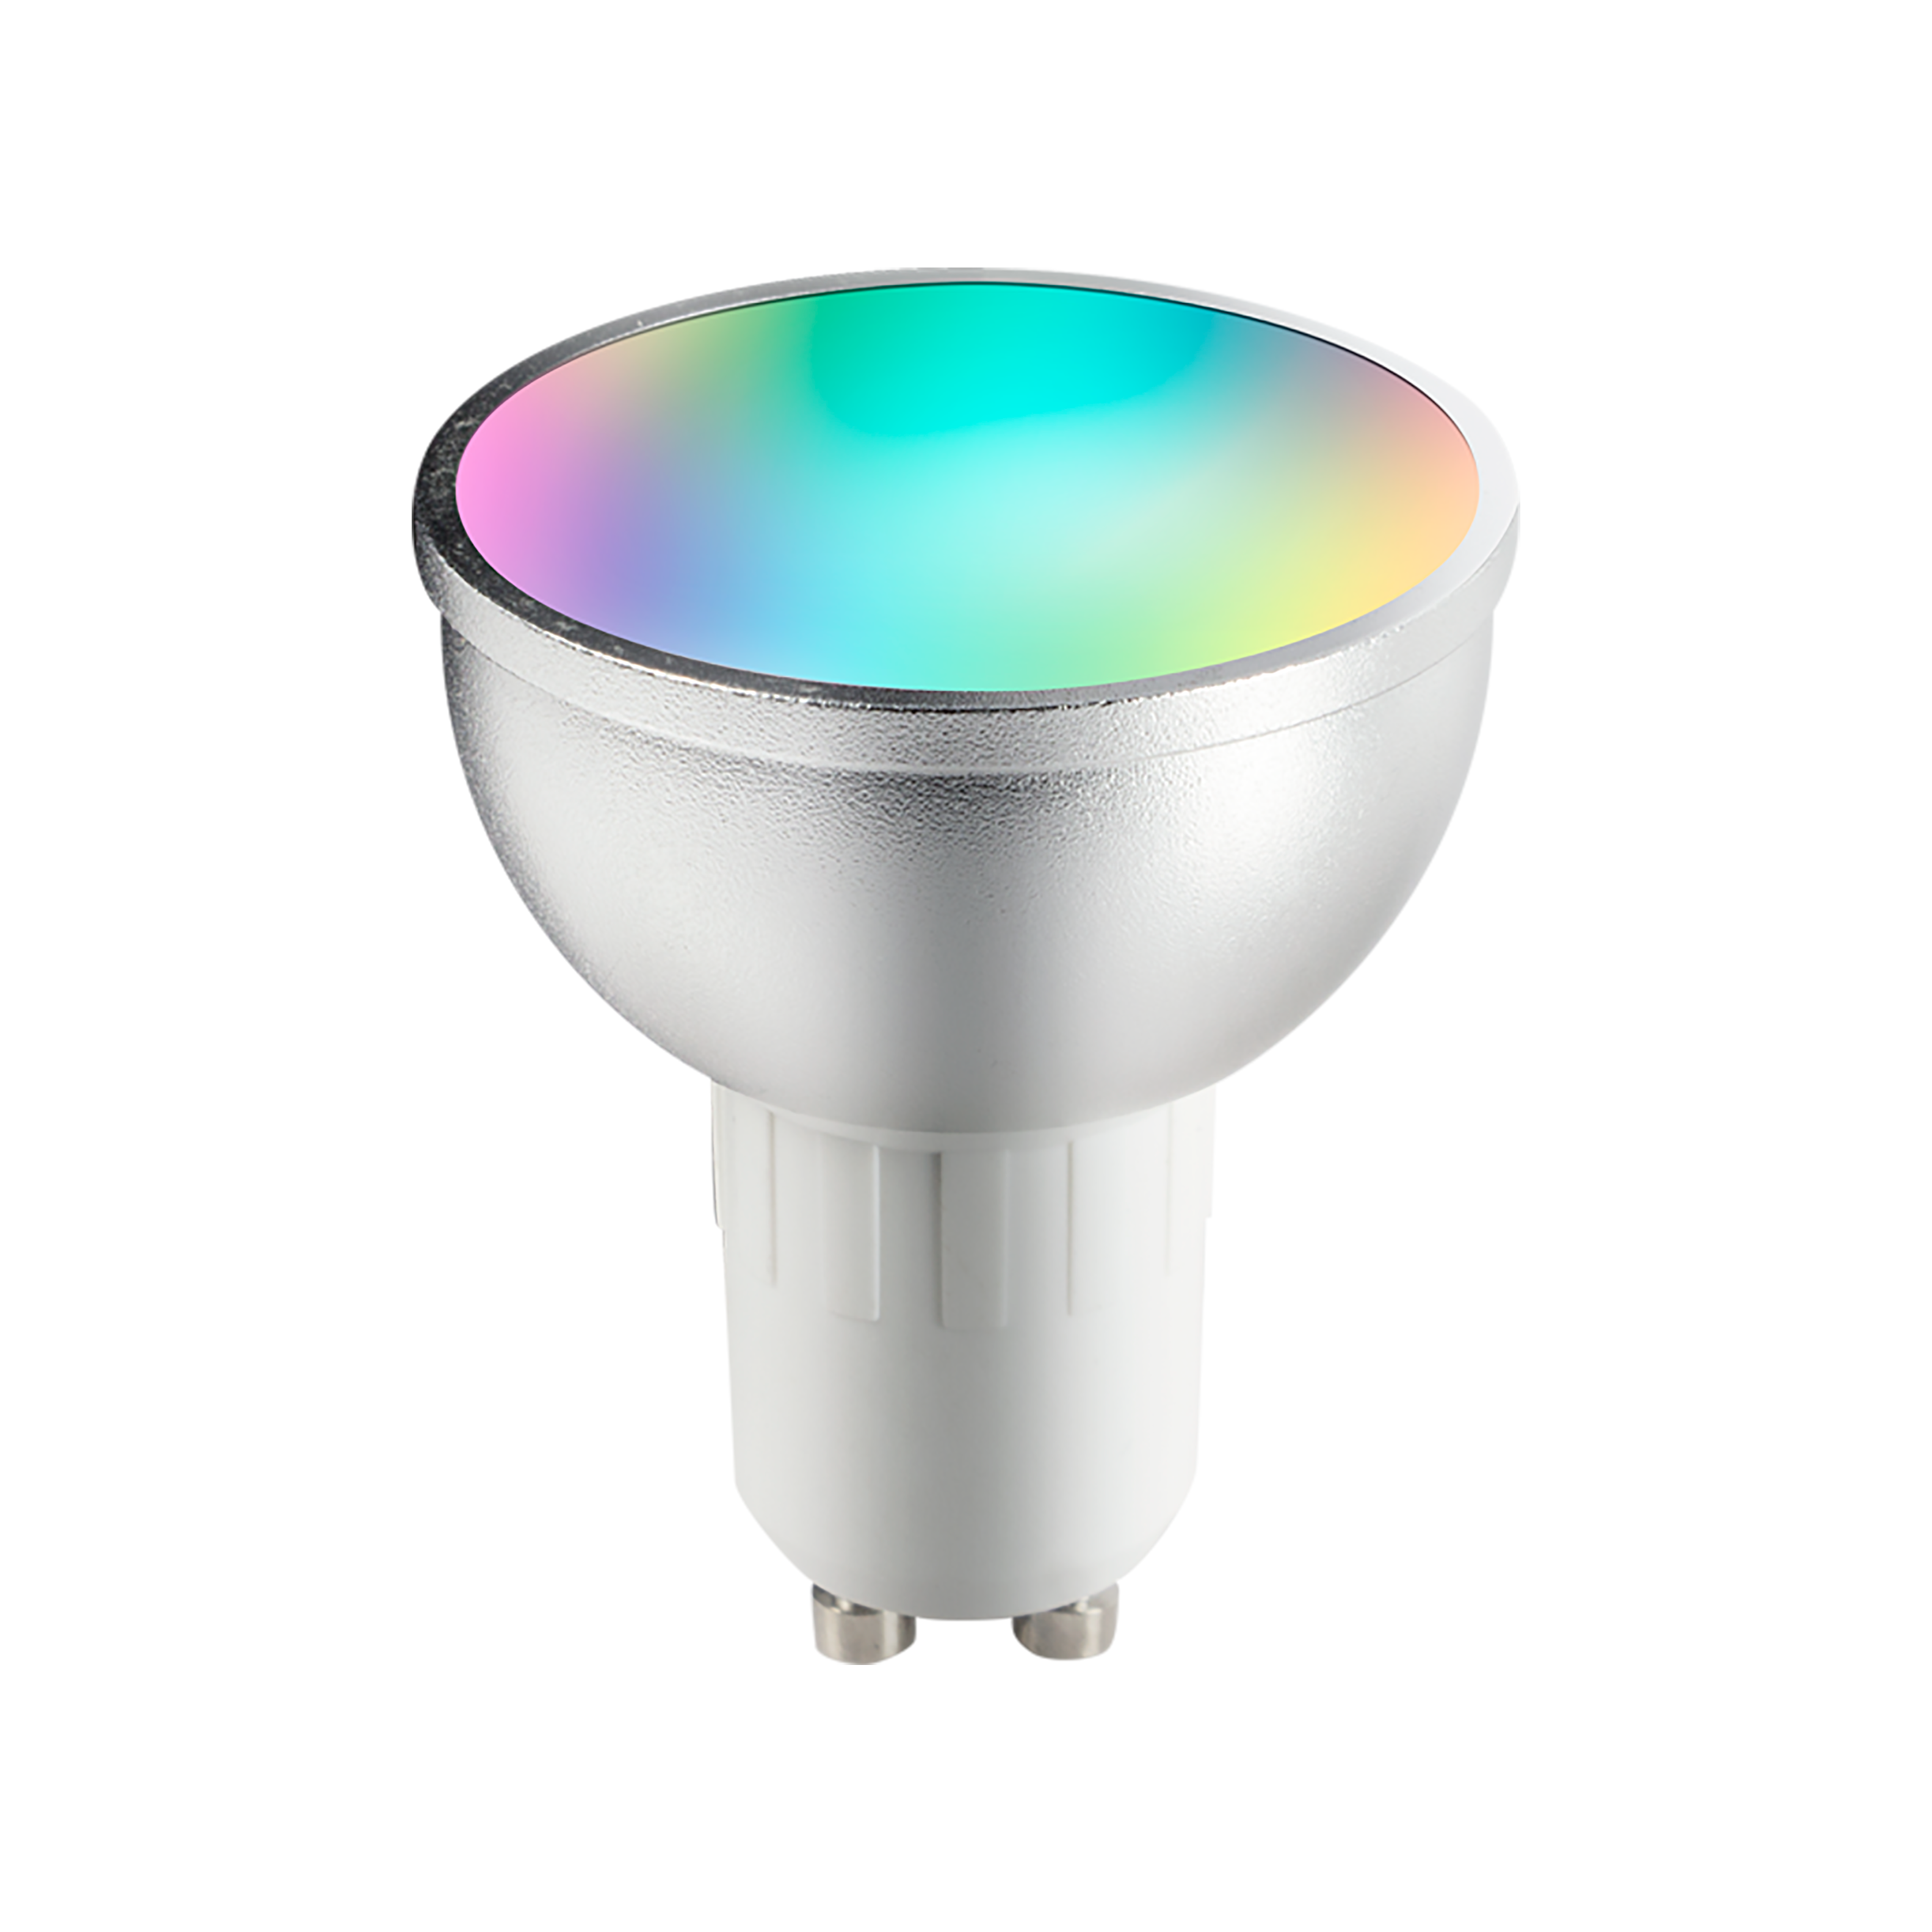 Unigreat APP Remote Control Dimmable Light Bulbs Work with Alexa/Google RGBW 5W Lamps GU10 WiFi Smart LED Bulbs